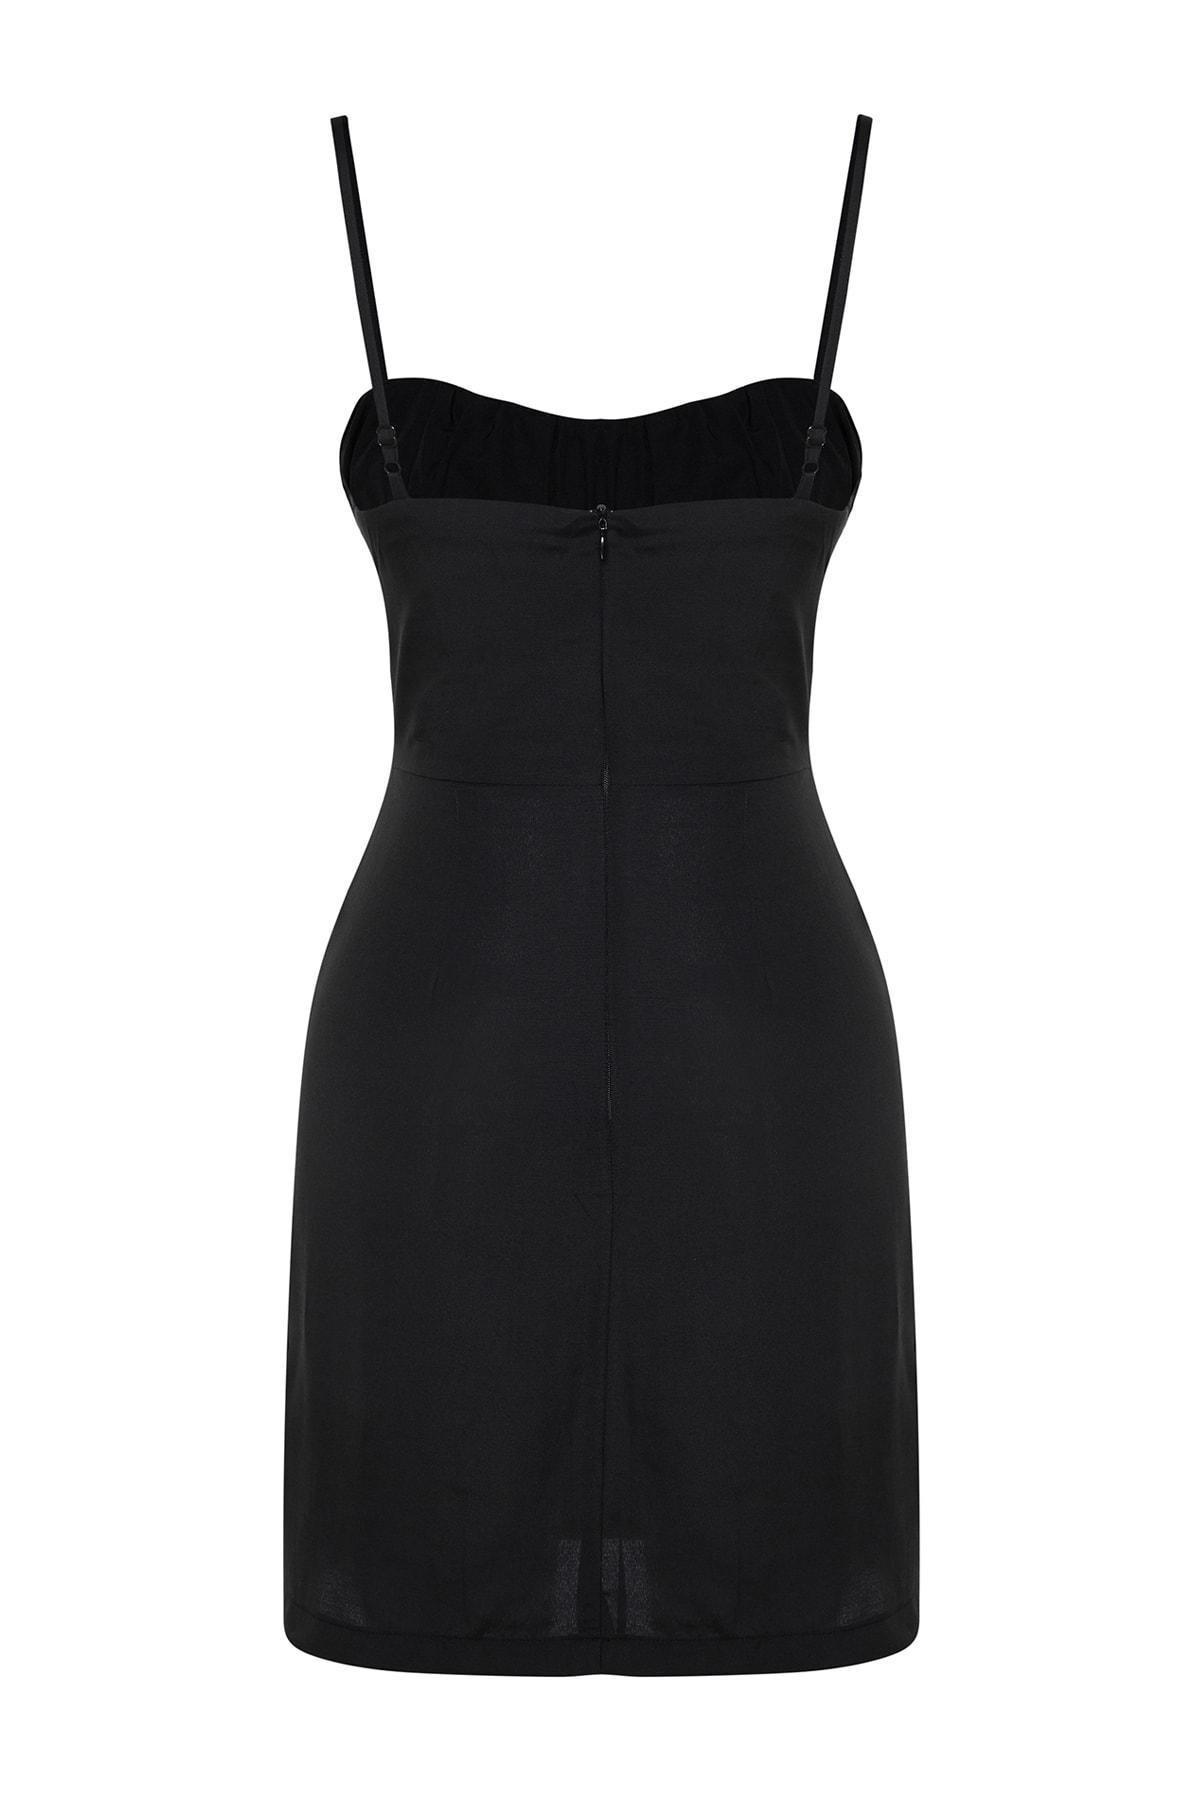 Trendyol - Black A-Line Dress